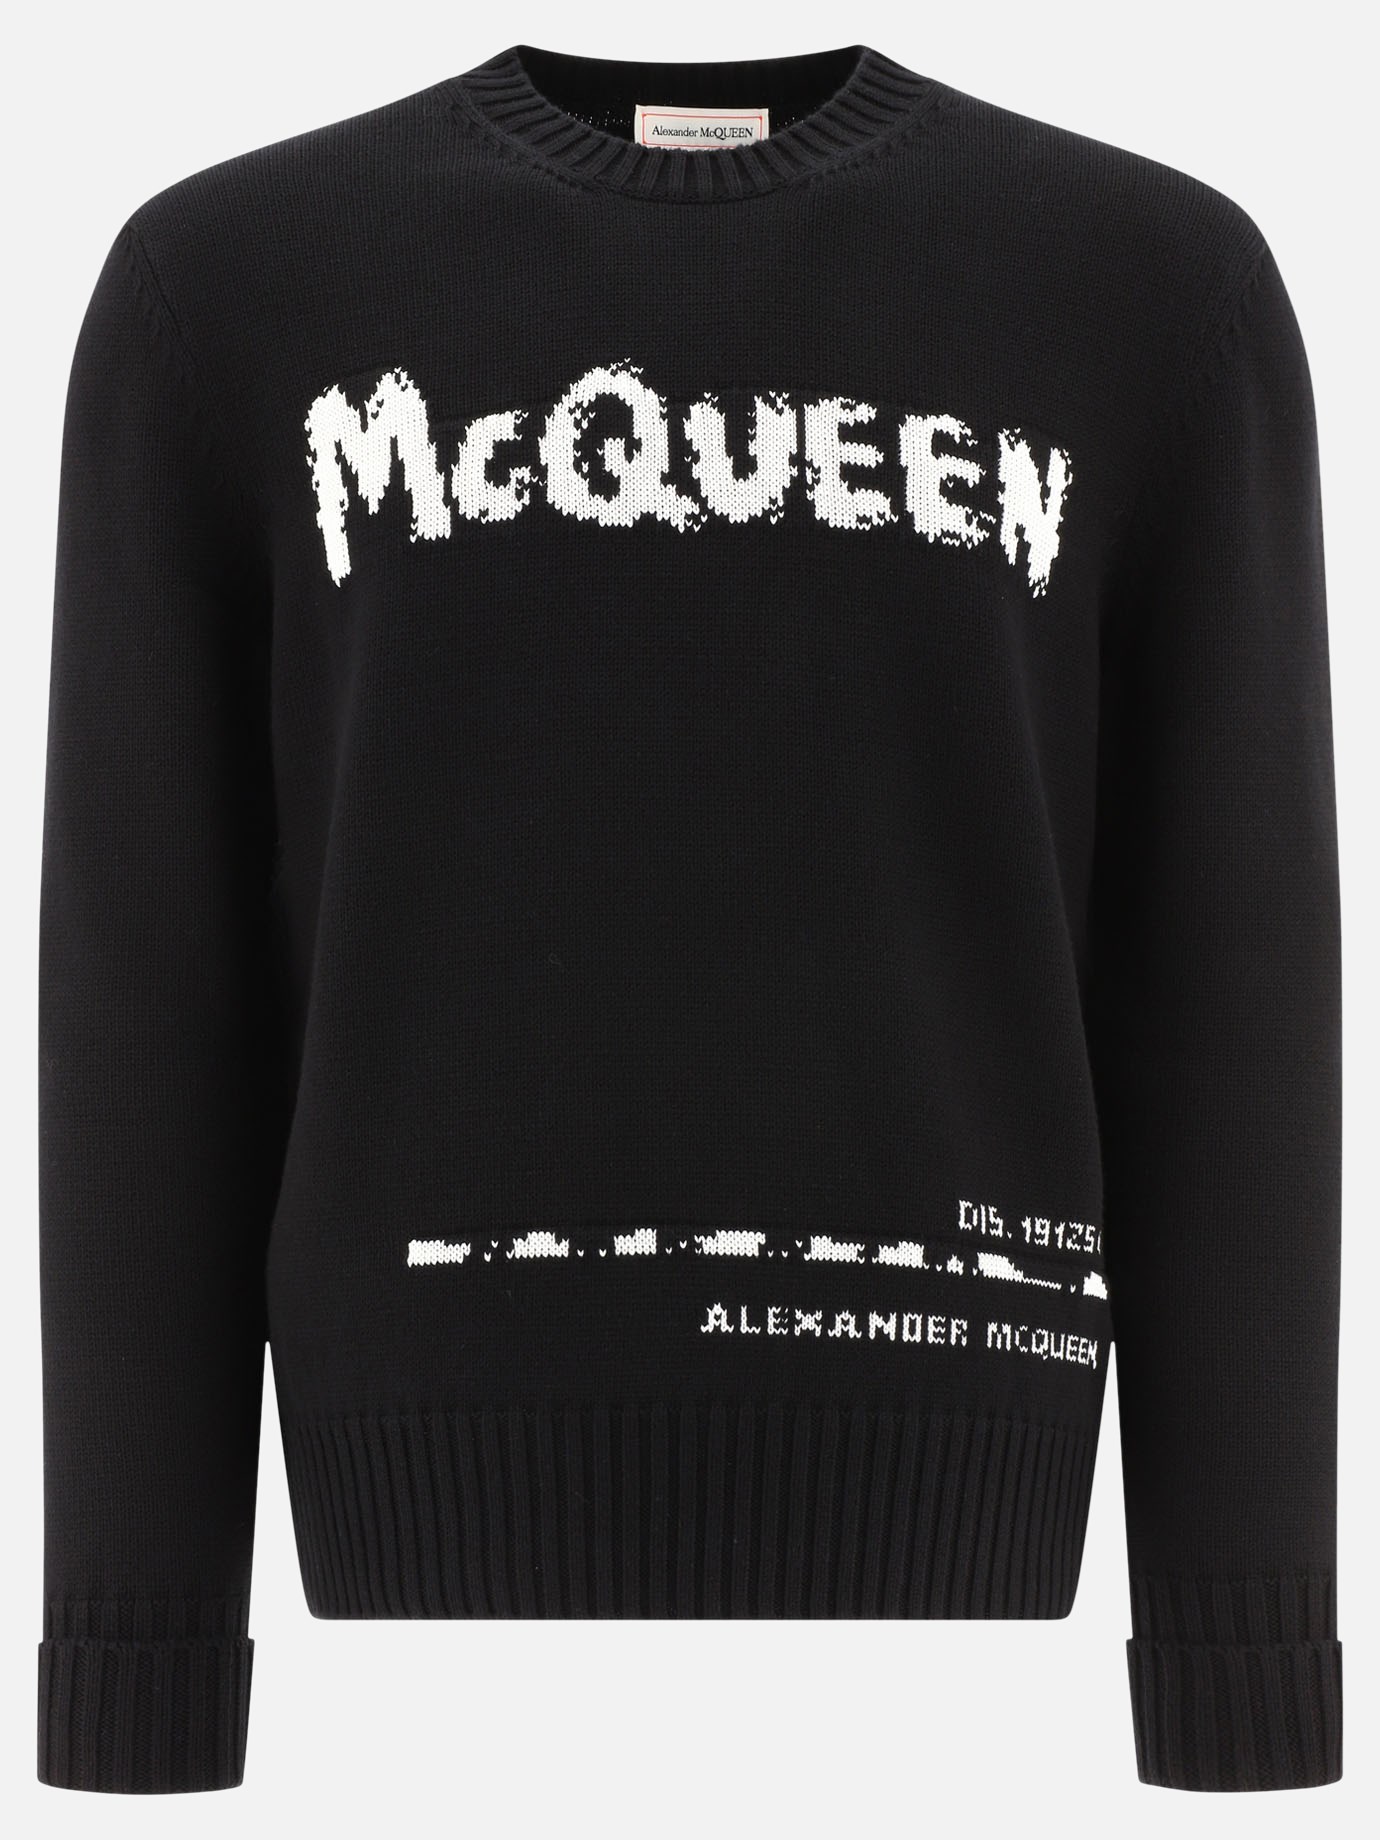  Graffiti  sweater by Alexander McQueen